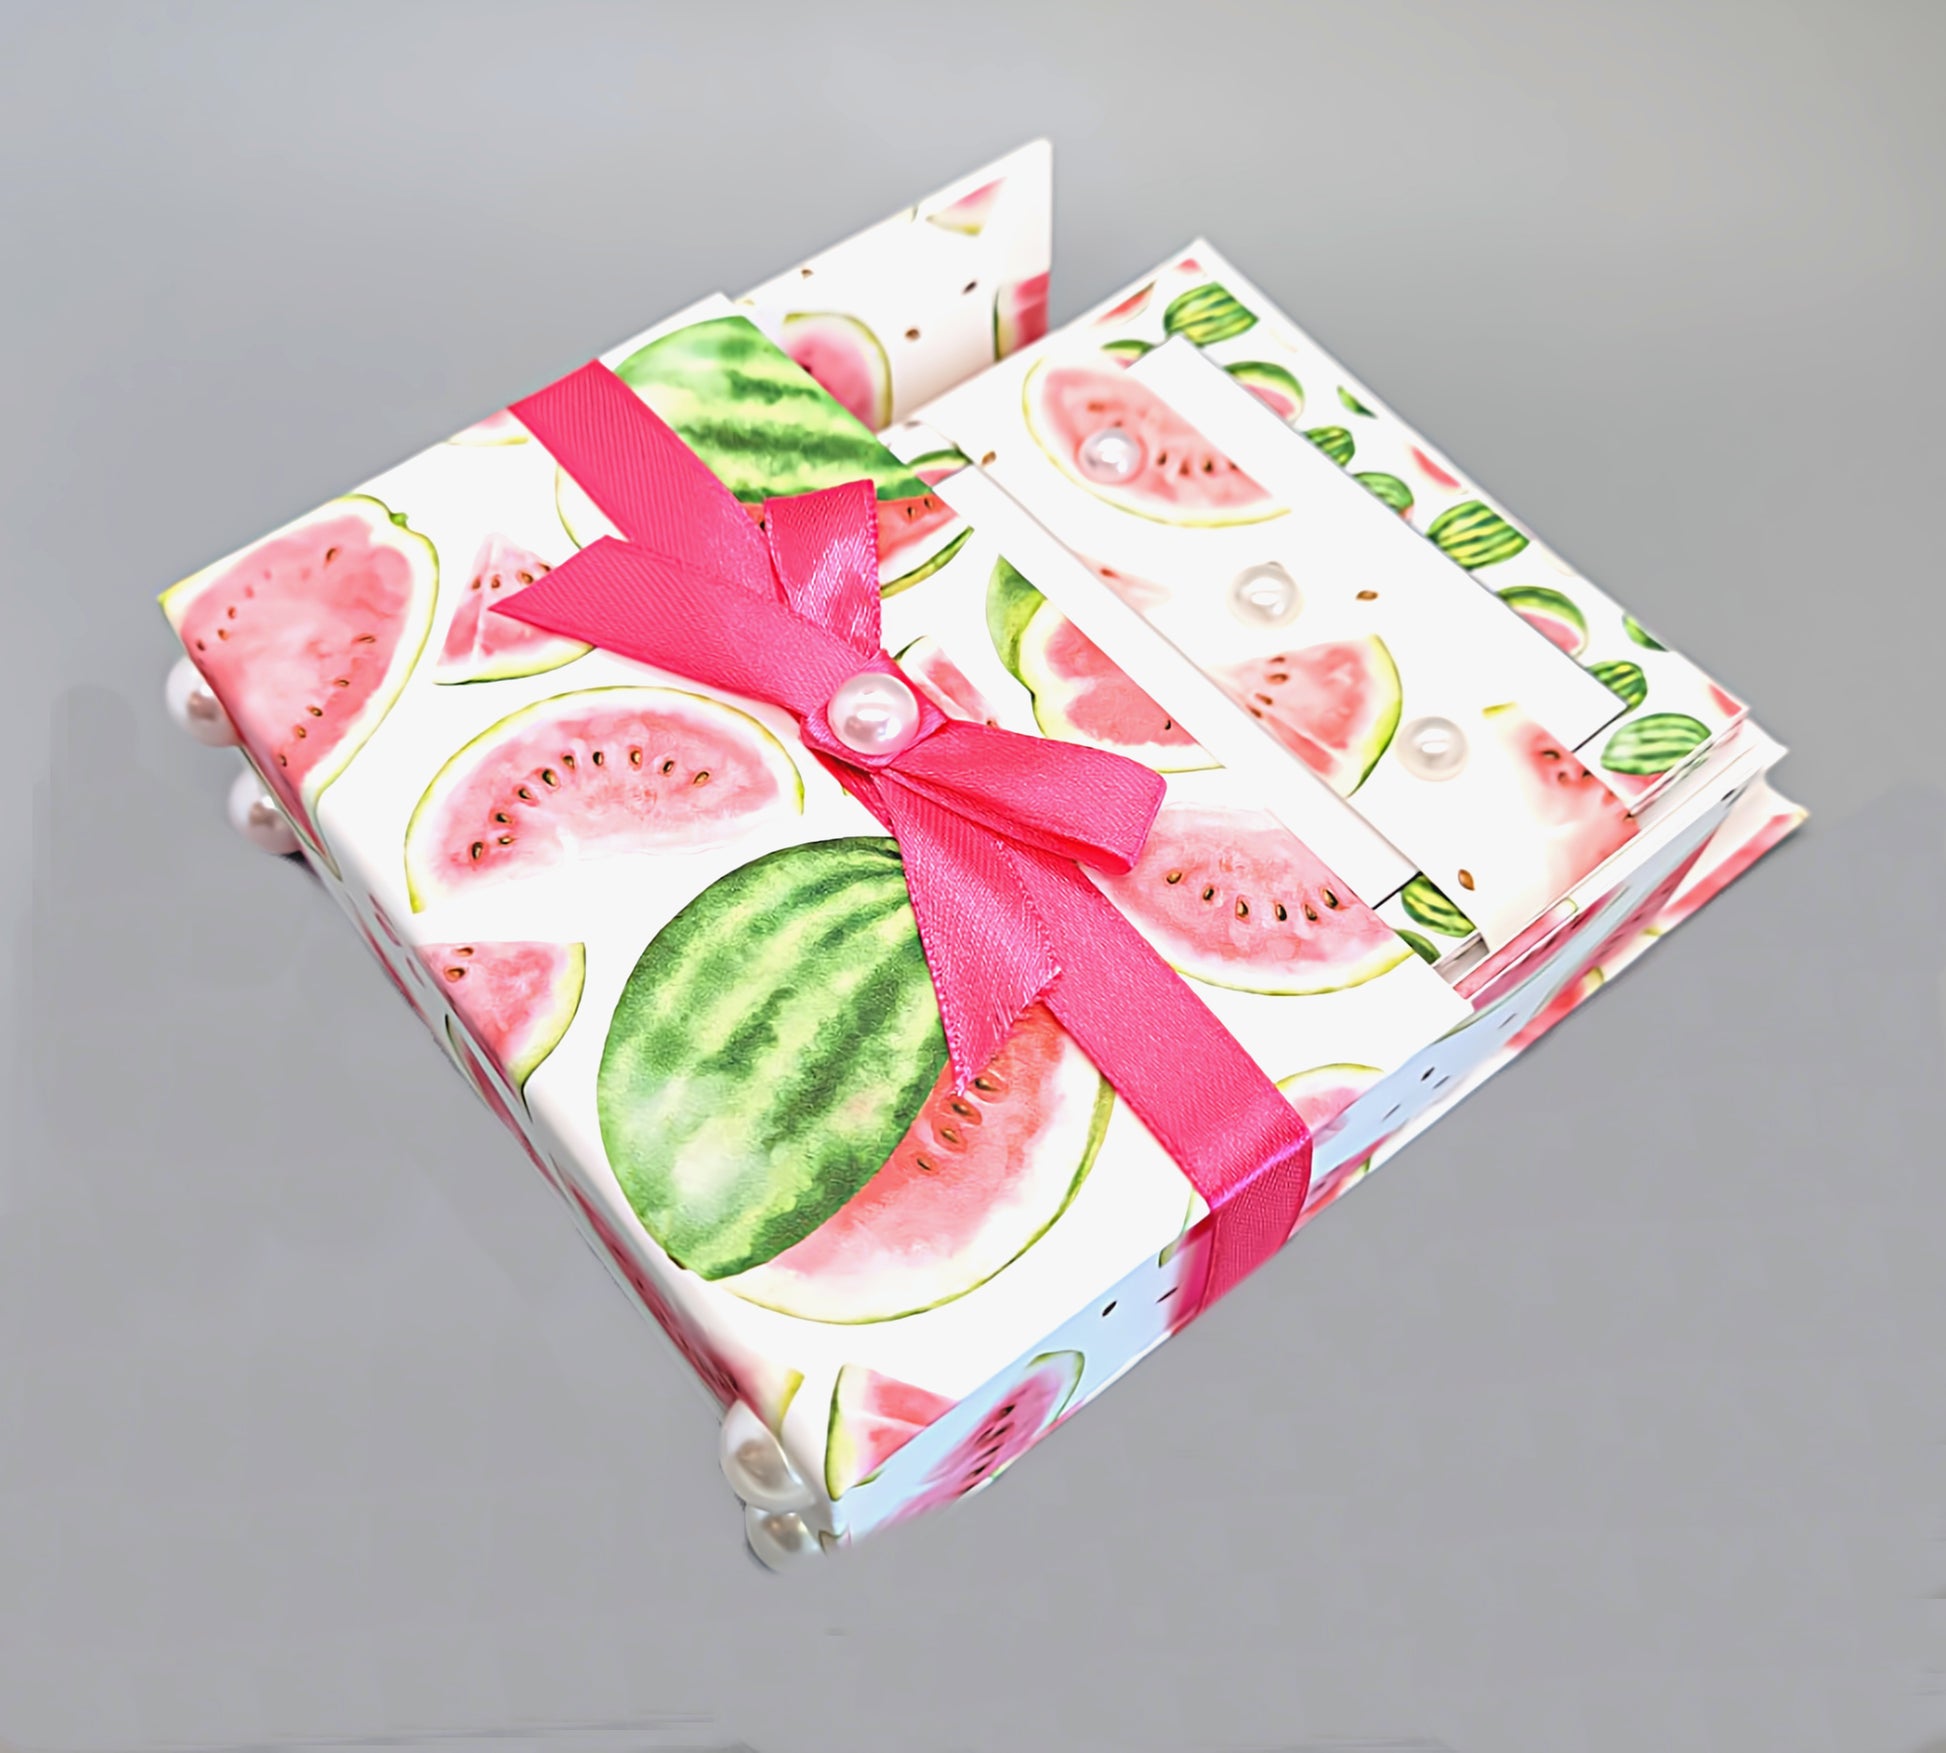 42-Pc Stationery Gift Box Set w/Reusable Desktop Organizer Box and Gold Pen - Fresh Red Watermelon - Chic Brico